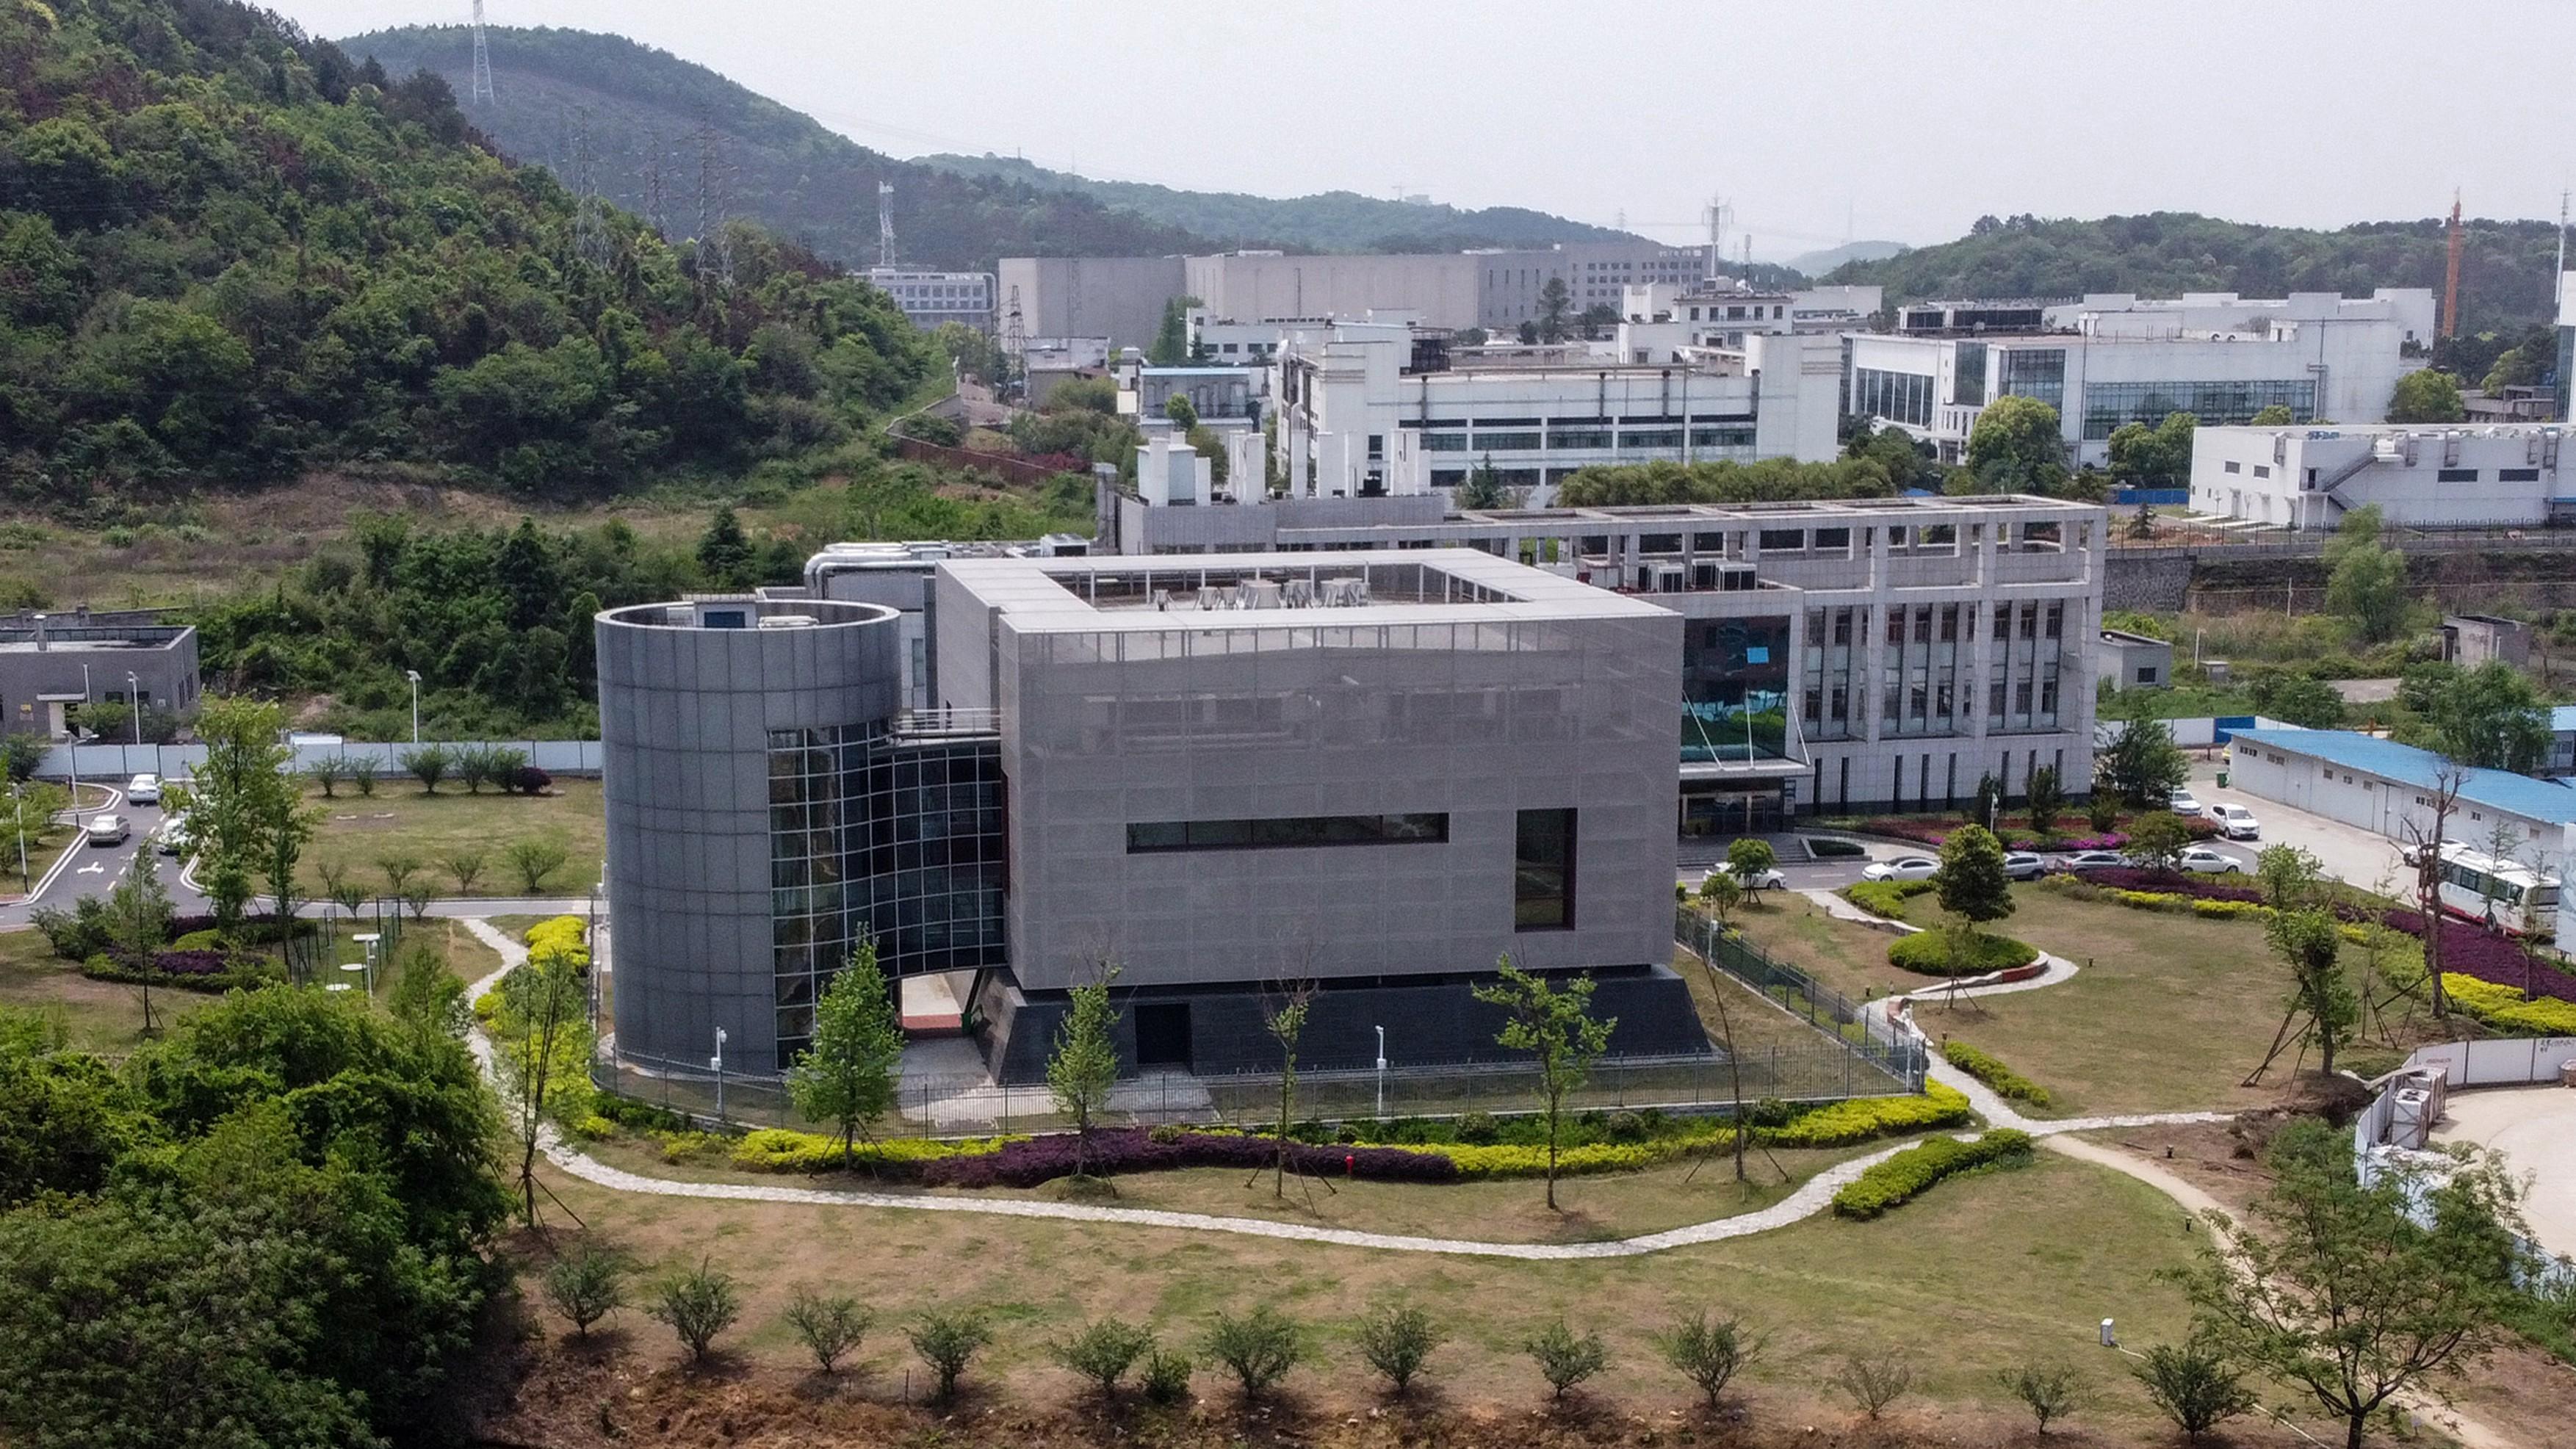 Institutul de Virologie din Wuhan